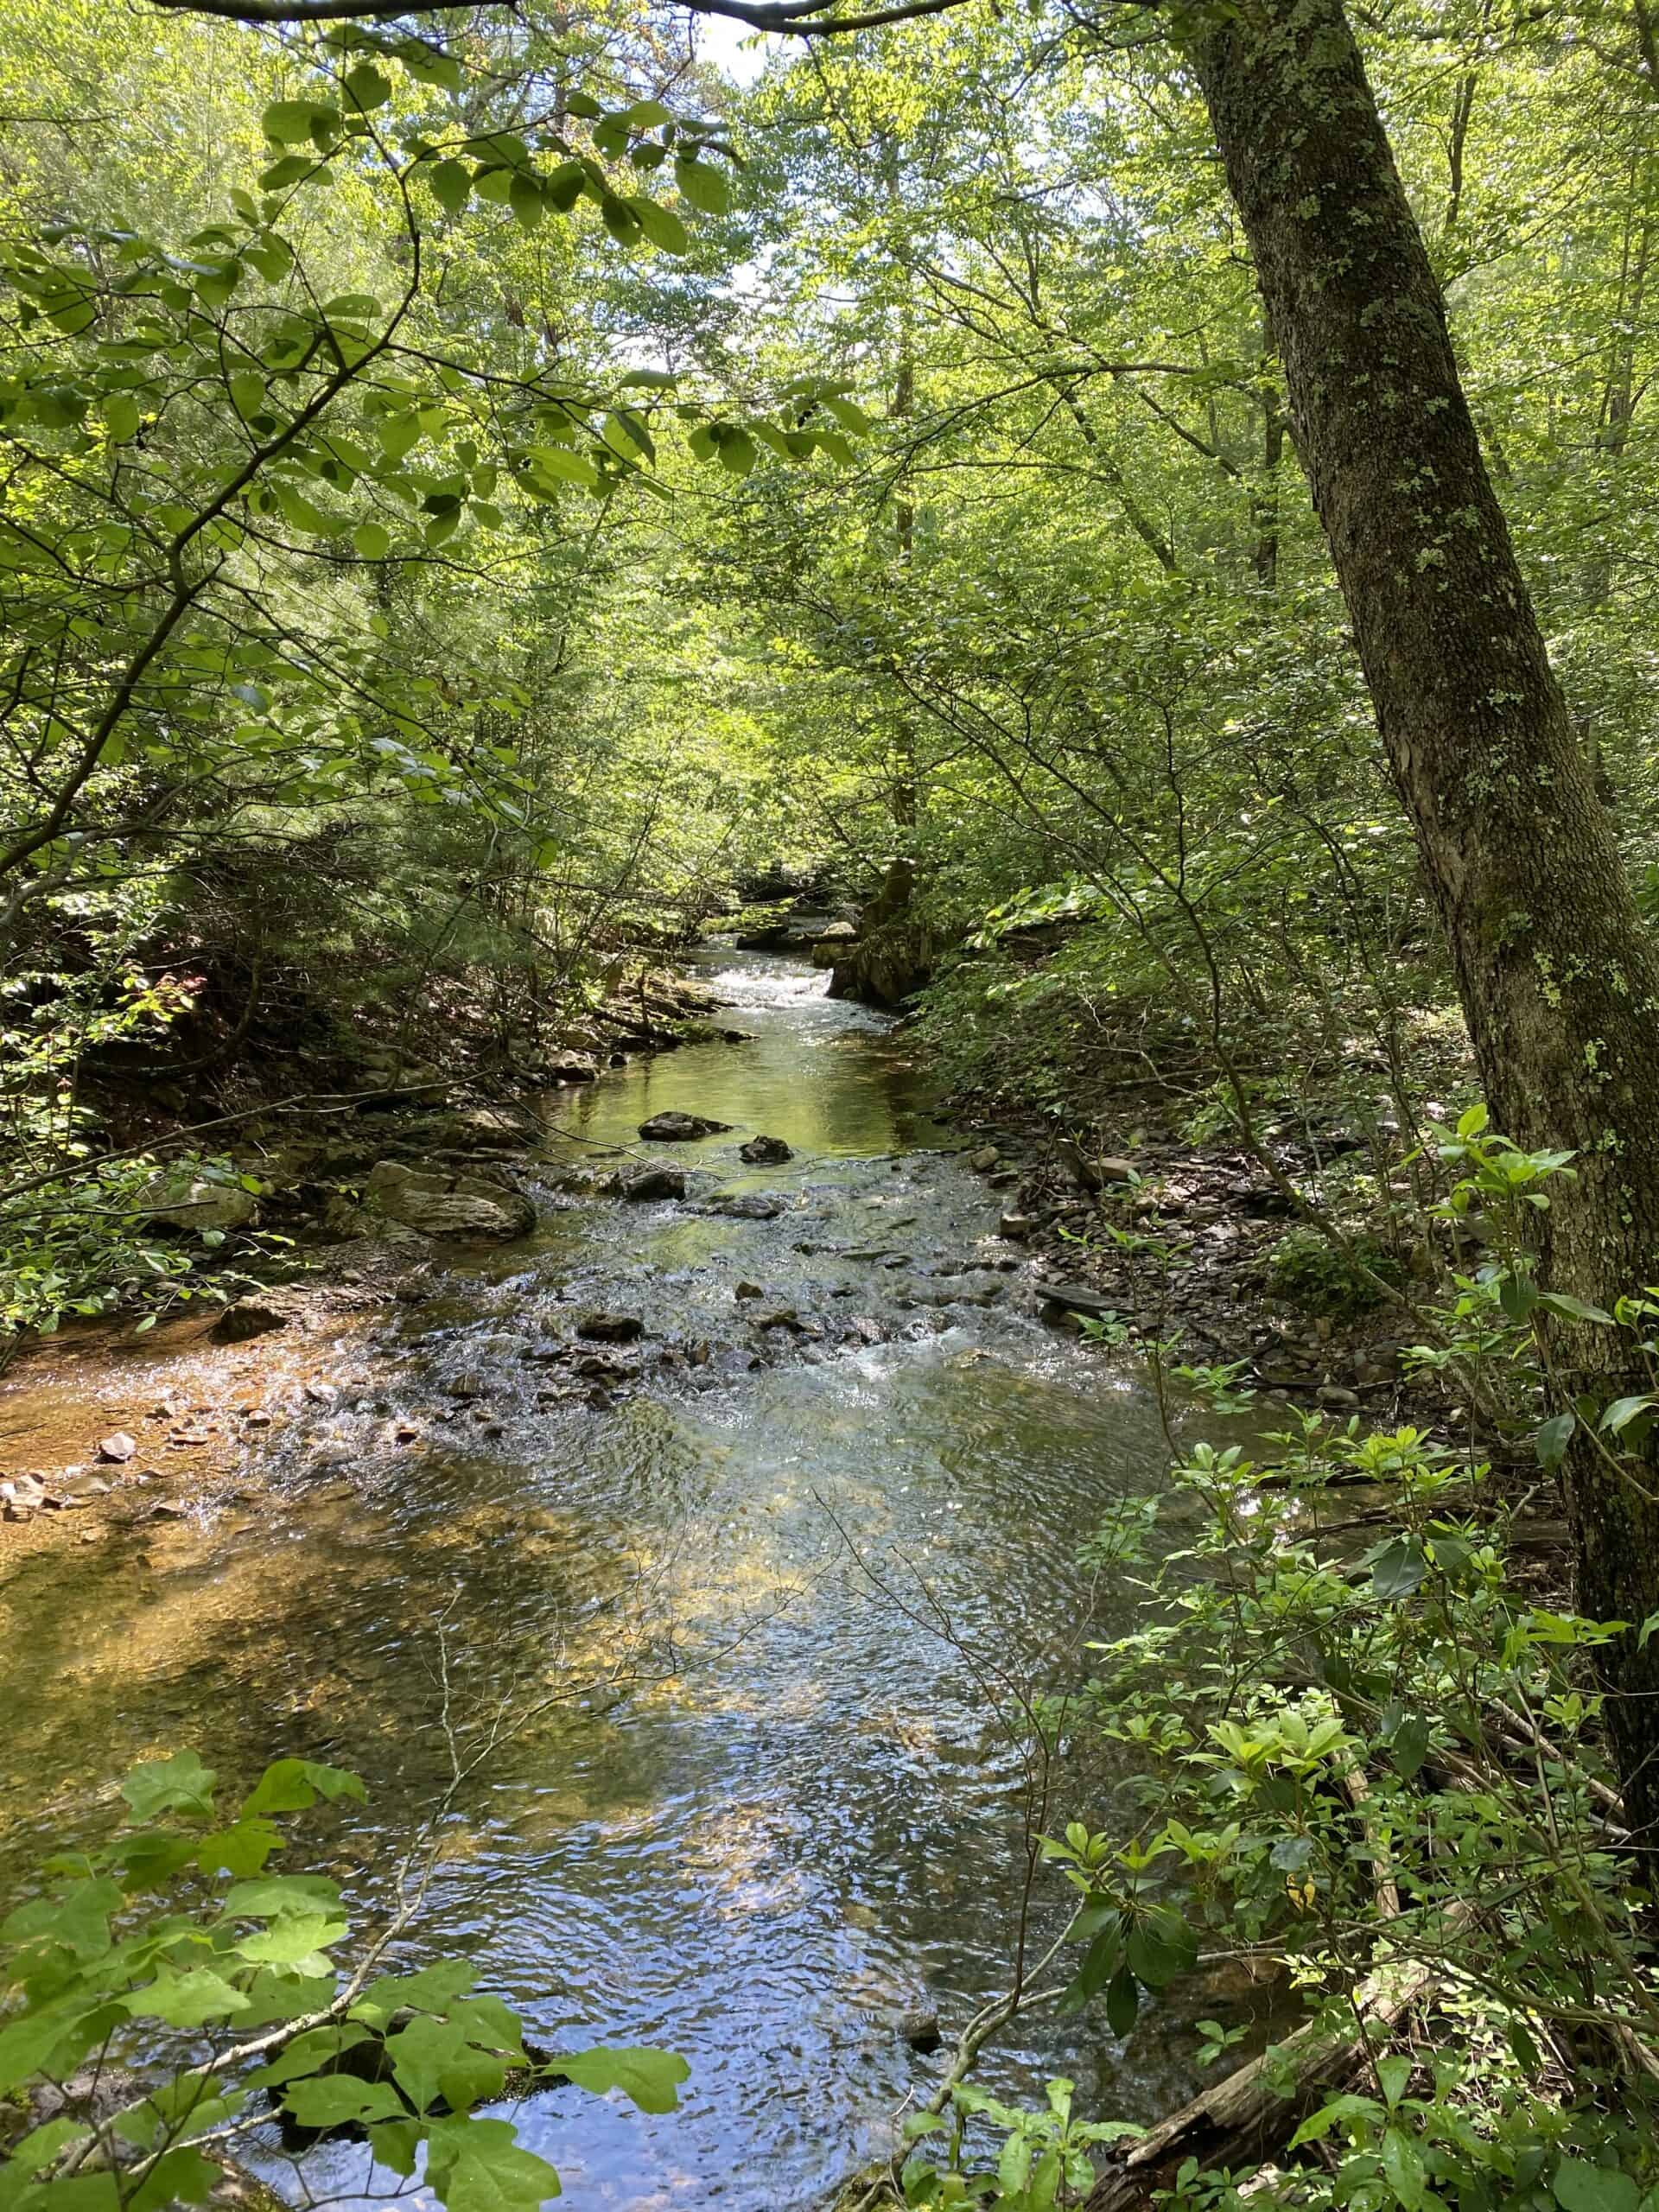 Doyles River Loop via Appalachian Trail